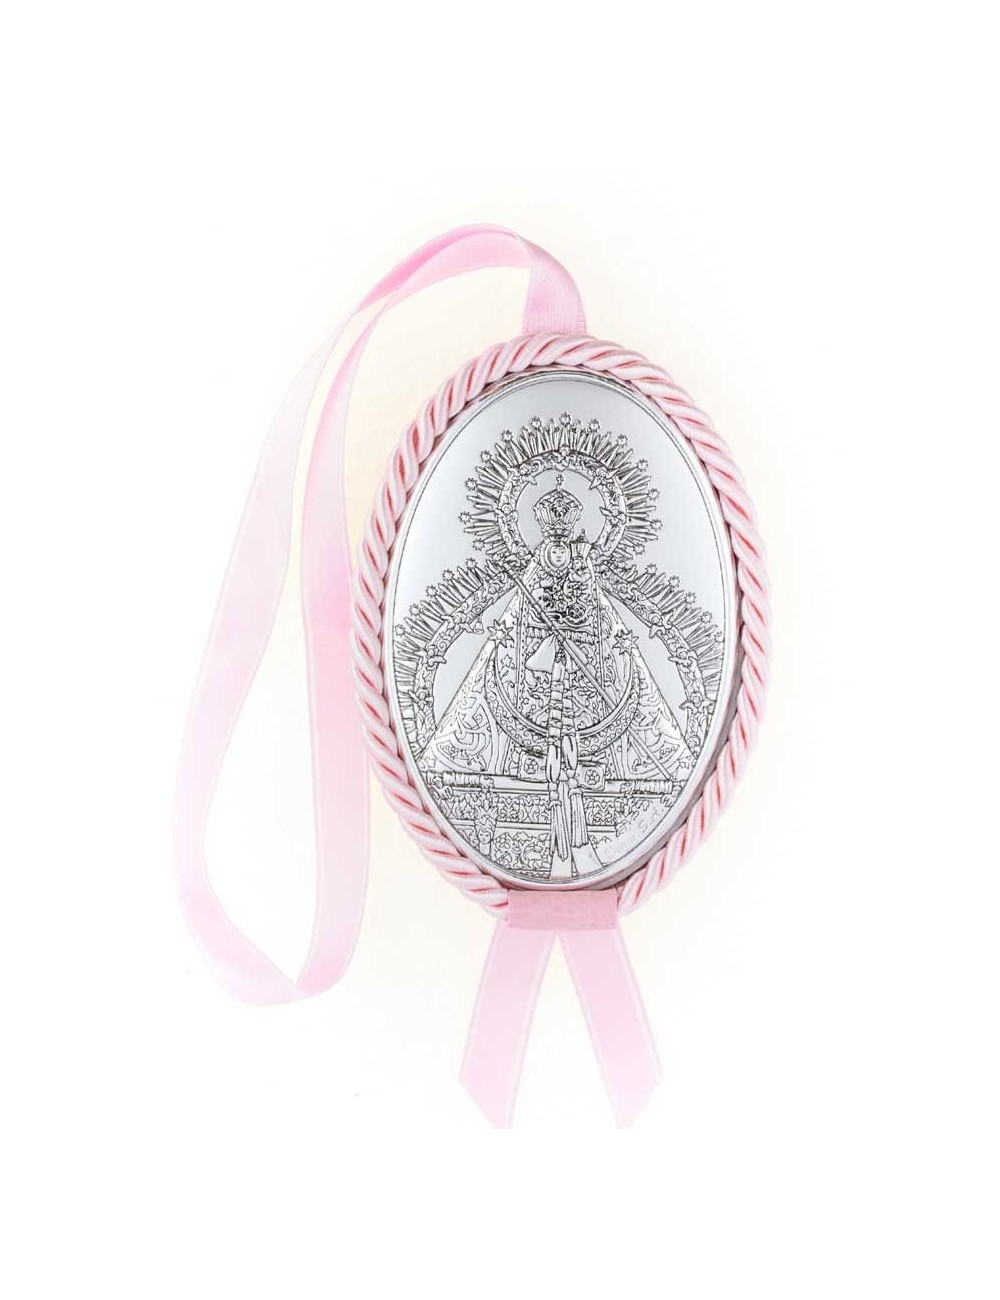 Medalla cuna Virgen de la Cabeza polipie oval rosa musical